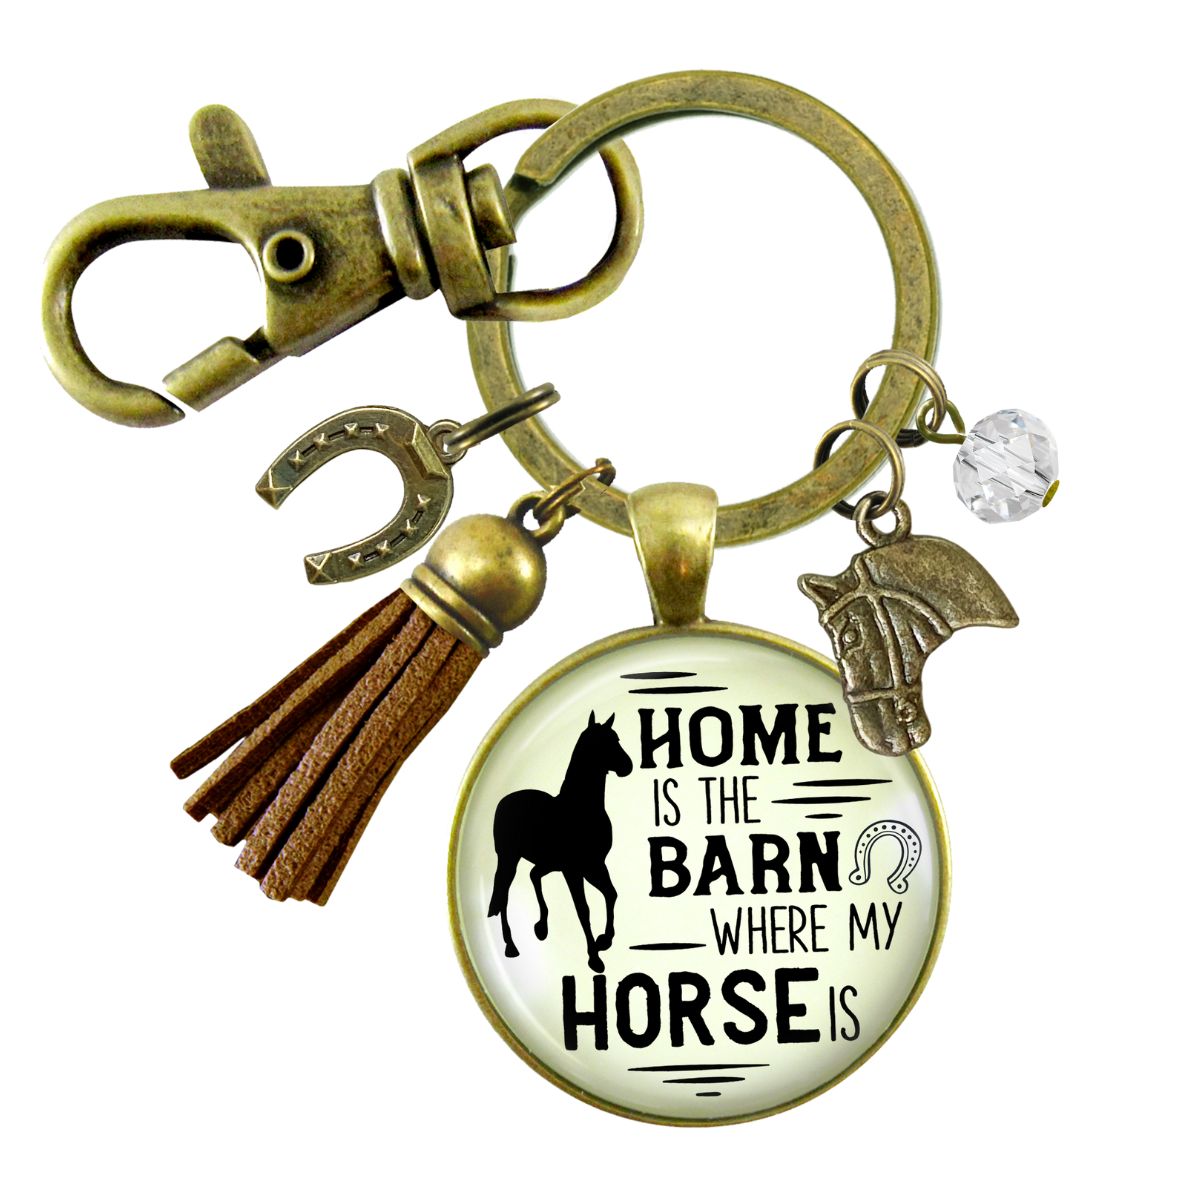 Handmade Gutsy Goodness Jewelry Home Is The Barn Where My Horse Is Keychain Western Boho Country Girl Tassel Charm Jewelry & Card